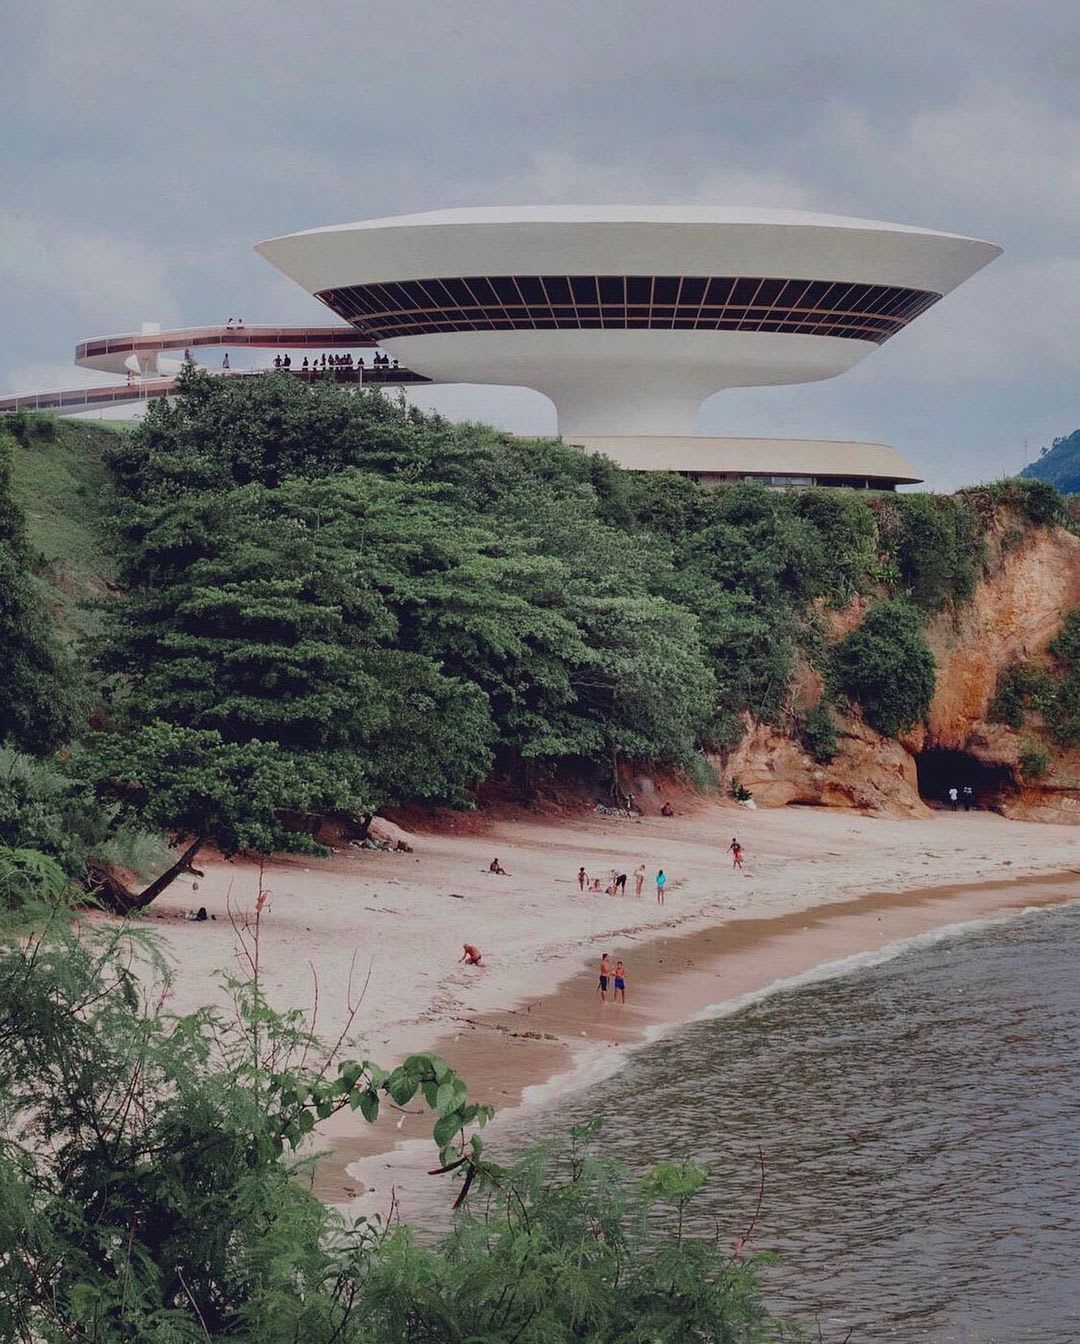 Niterói Contemporary Art Museum, Brazil, designed by Oscar Niemeyer in 1991